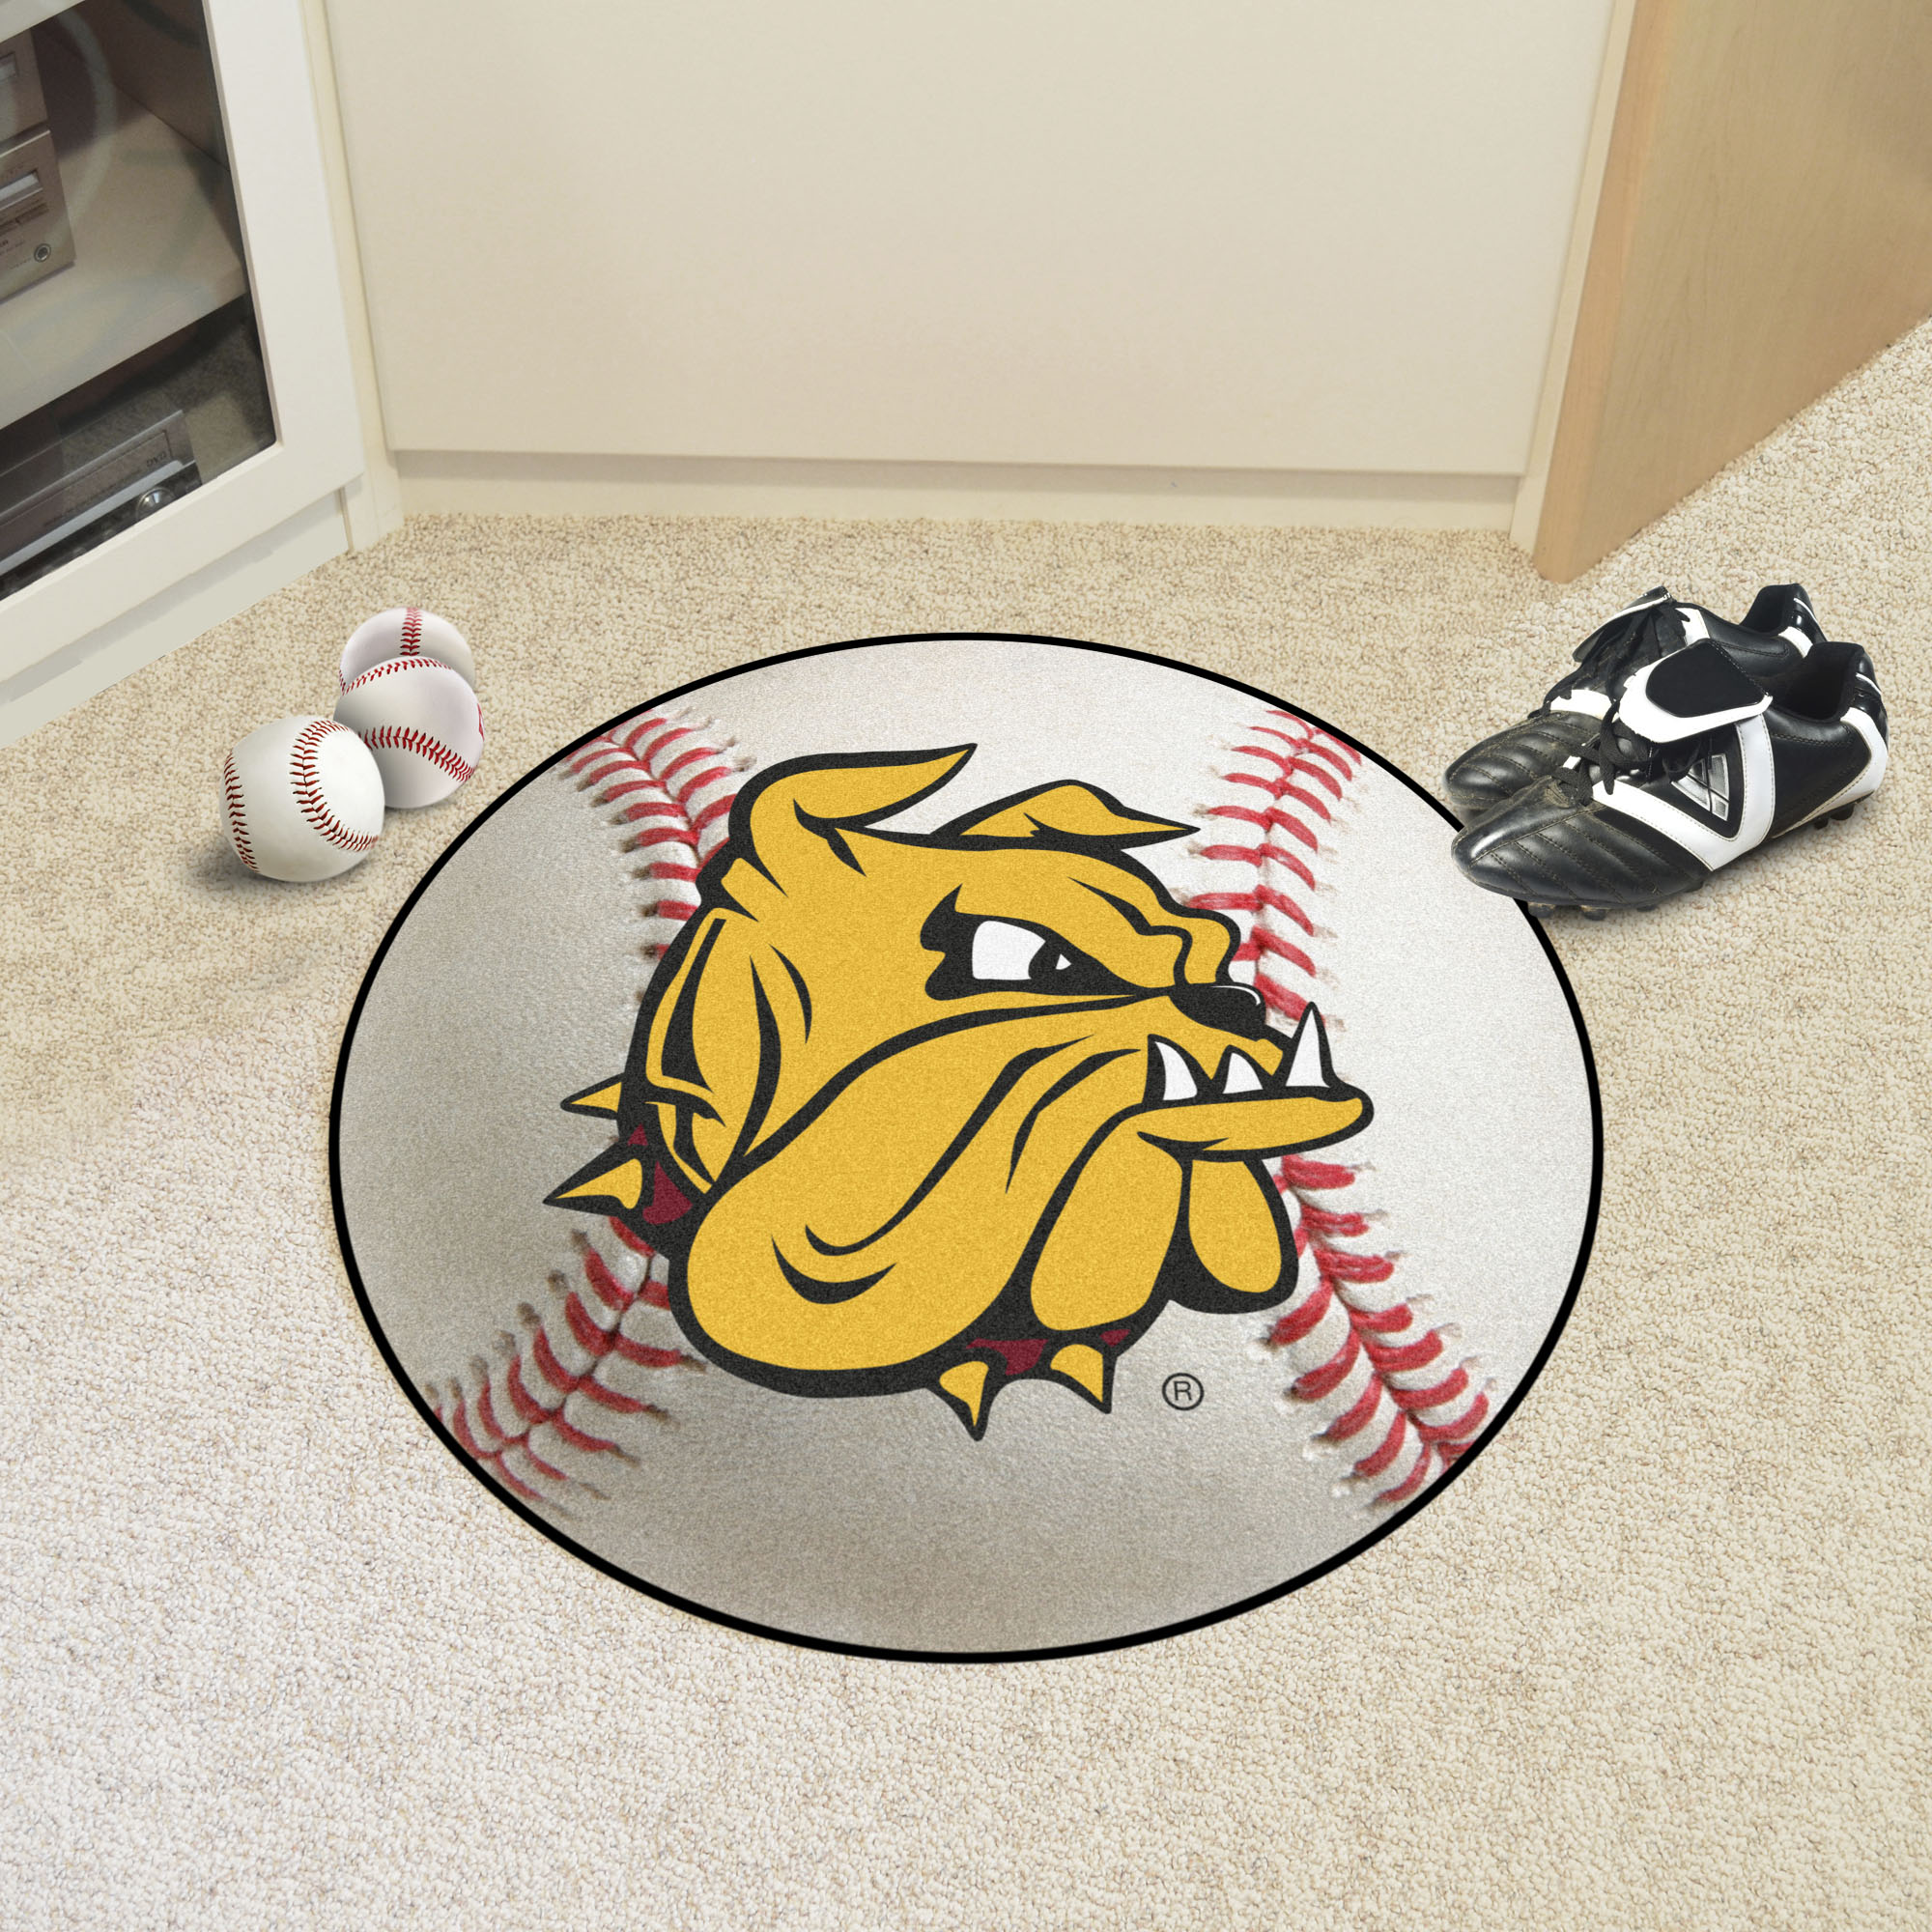 University of Duluth Duluth Ball Shaped Area Rugs (Ball Shaped Area Rugs: Baseball)